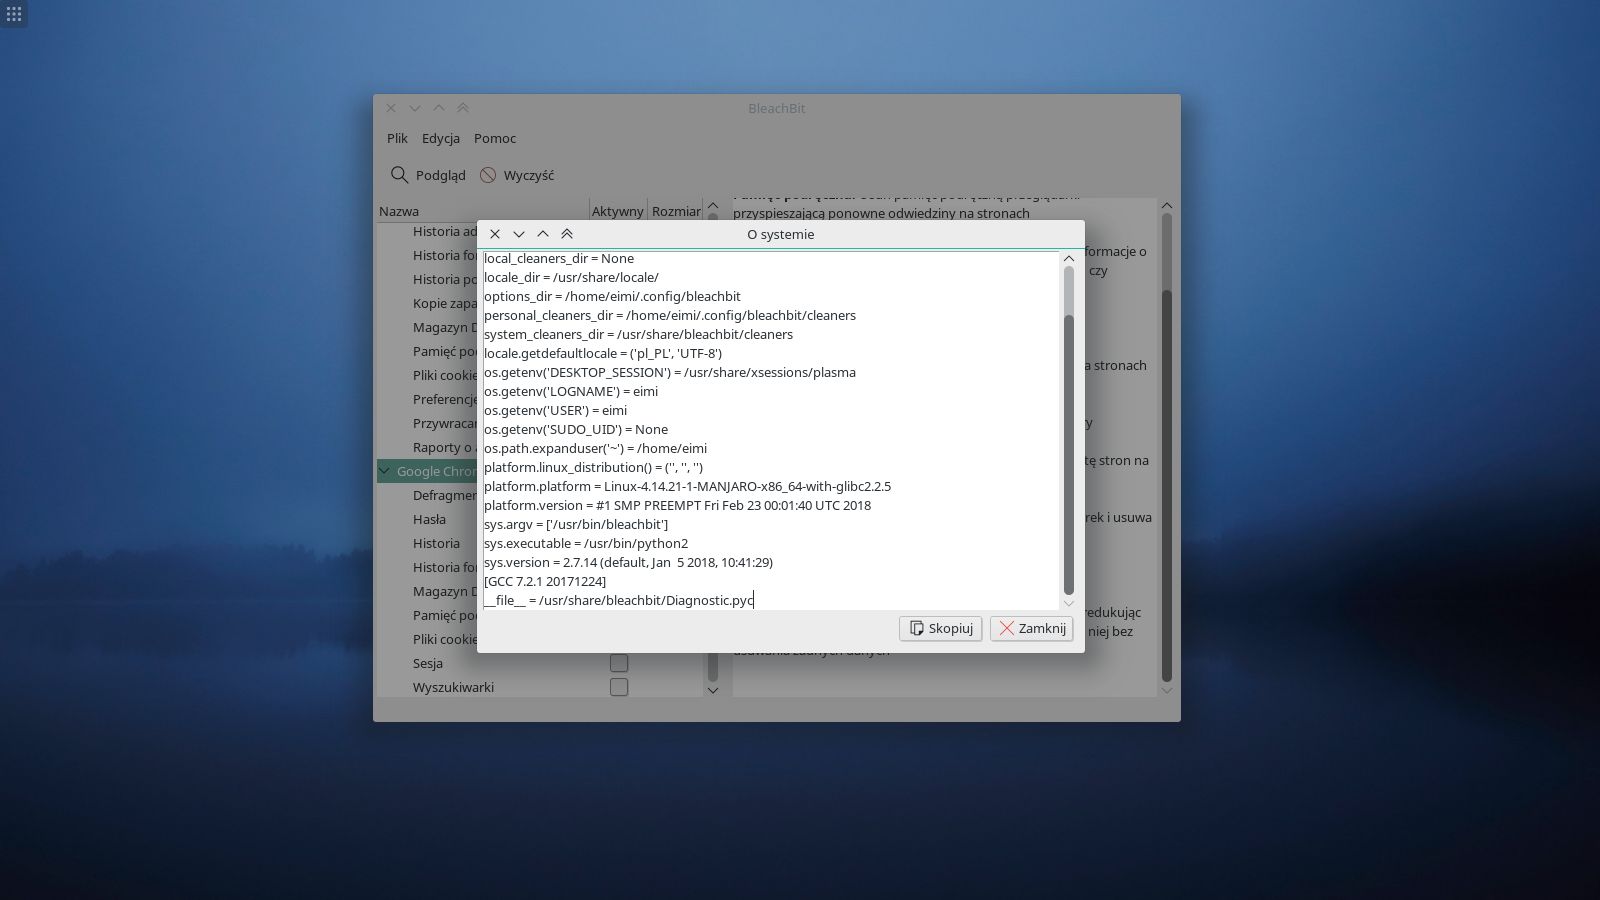 BleachBit 4.6.0 download the new for mac